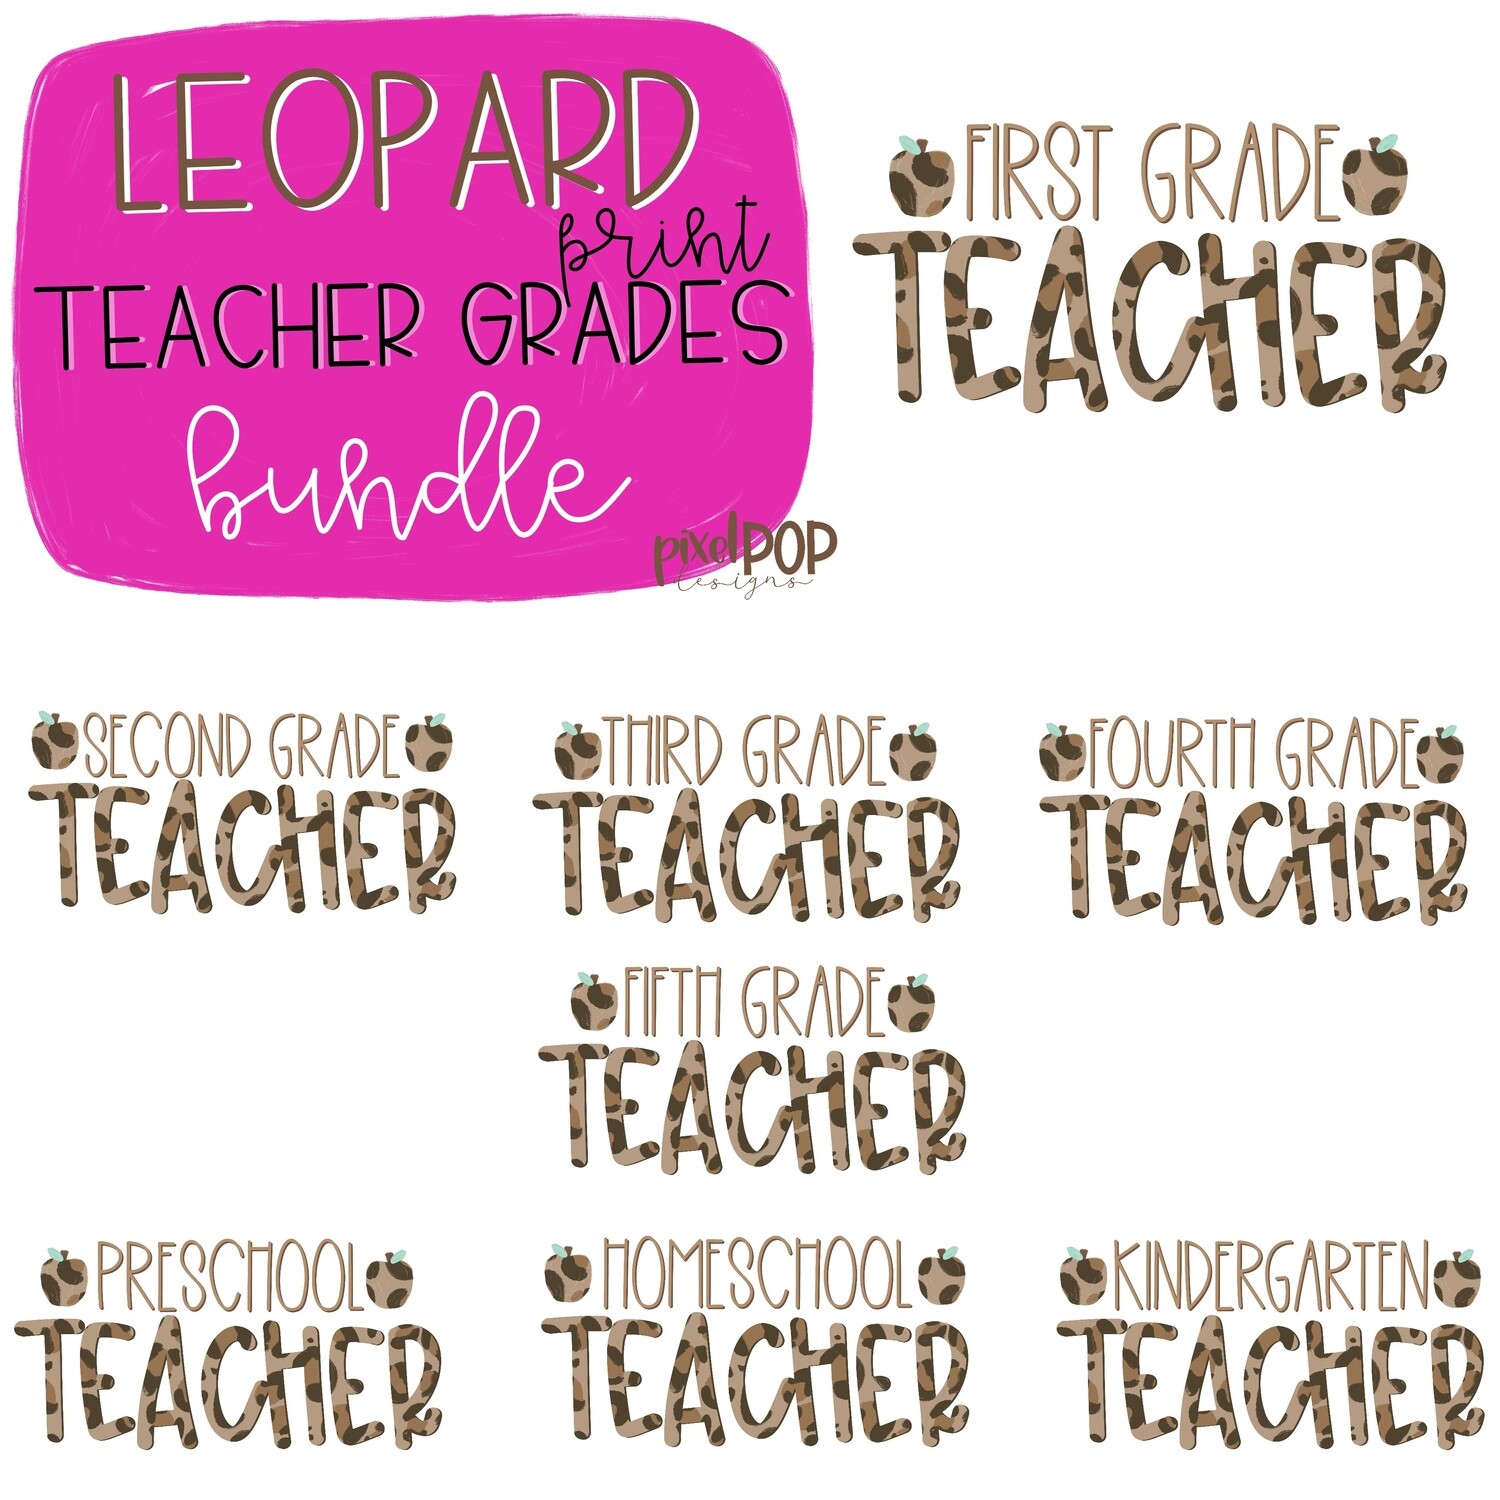 Leopard Teacher Grades Bundle | Teacher Design | Sublimation | Digital Art | Hand Painted | Digital Download | Teacher Printable | Art